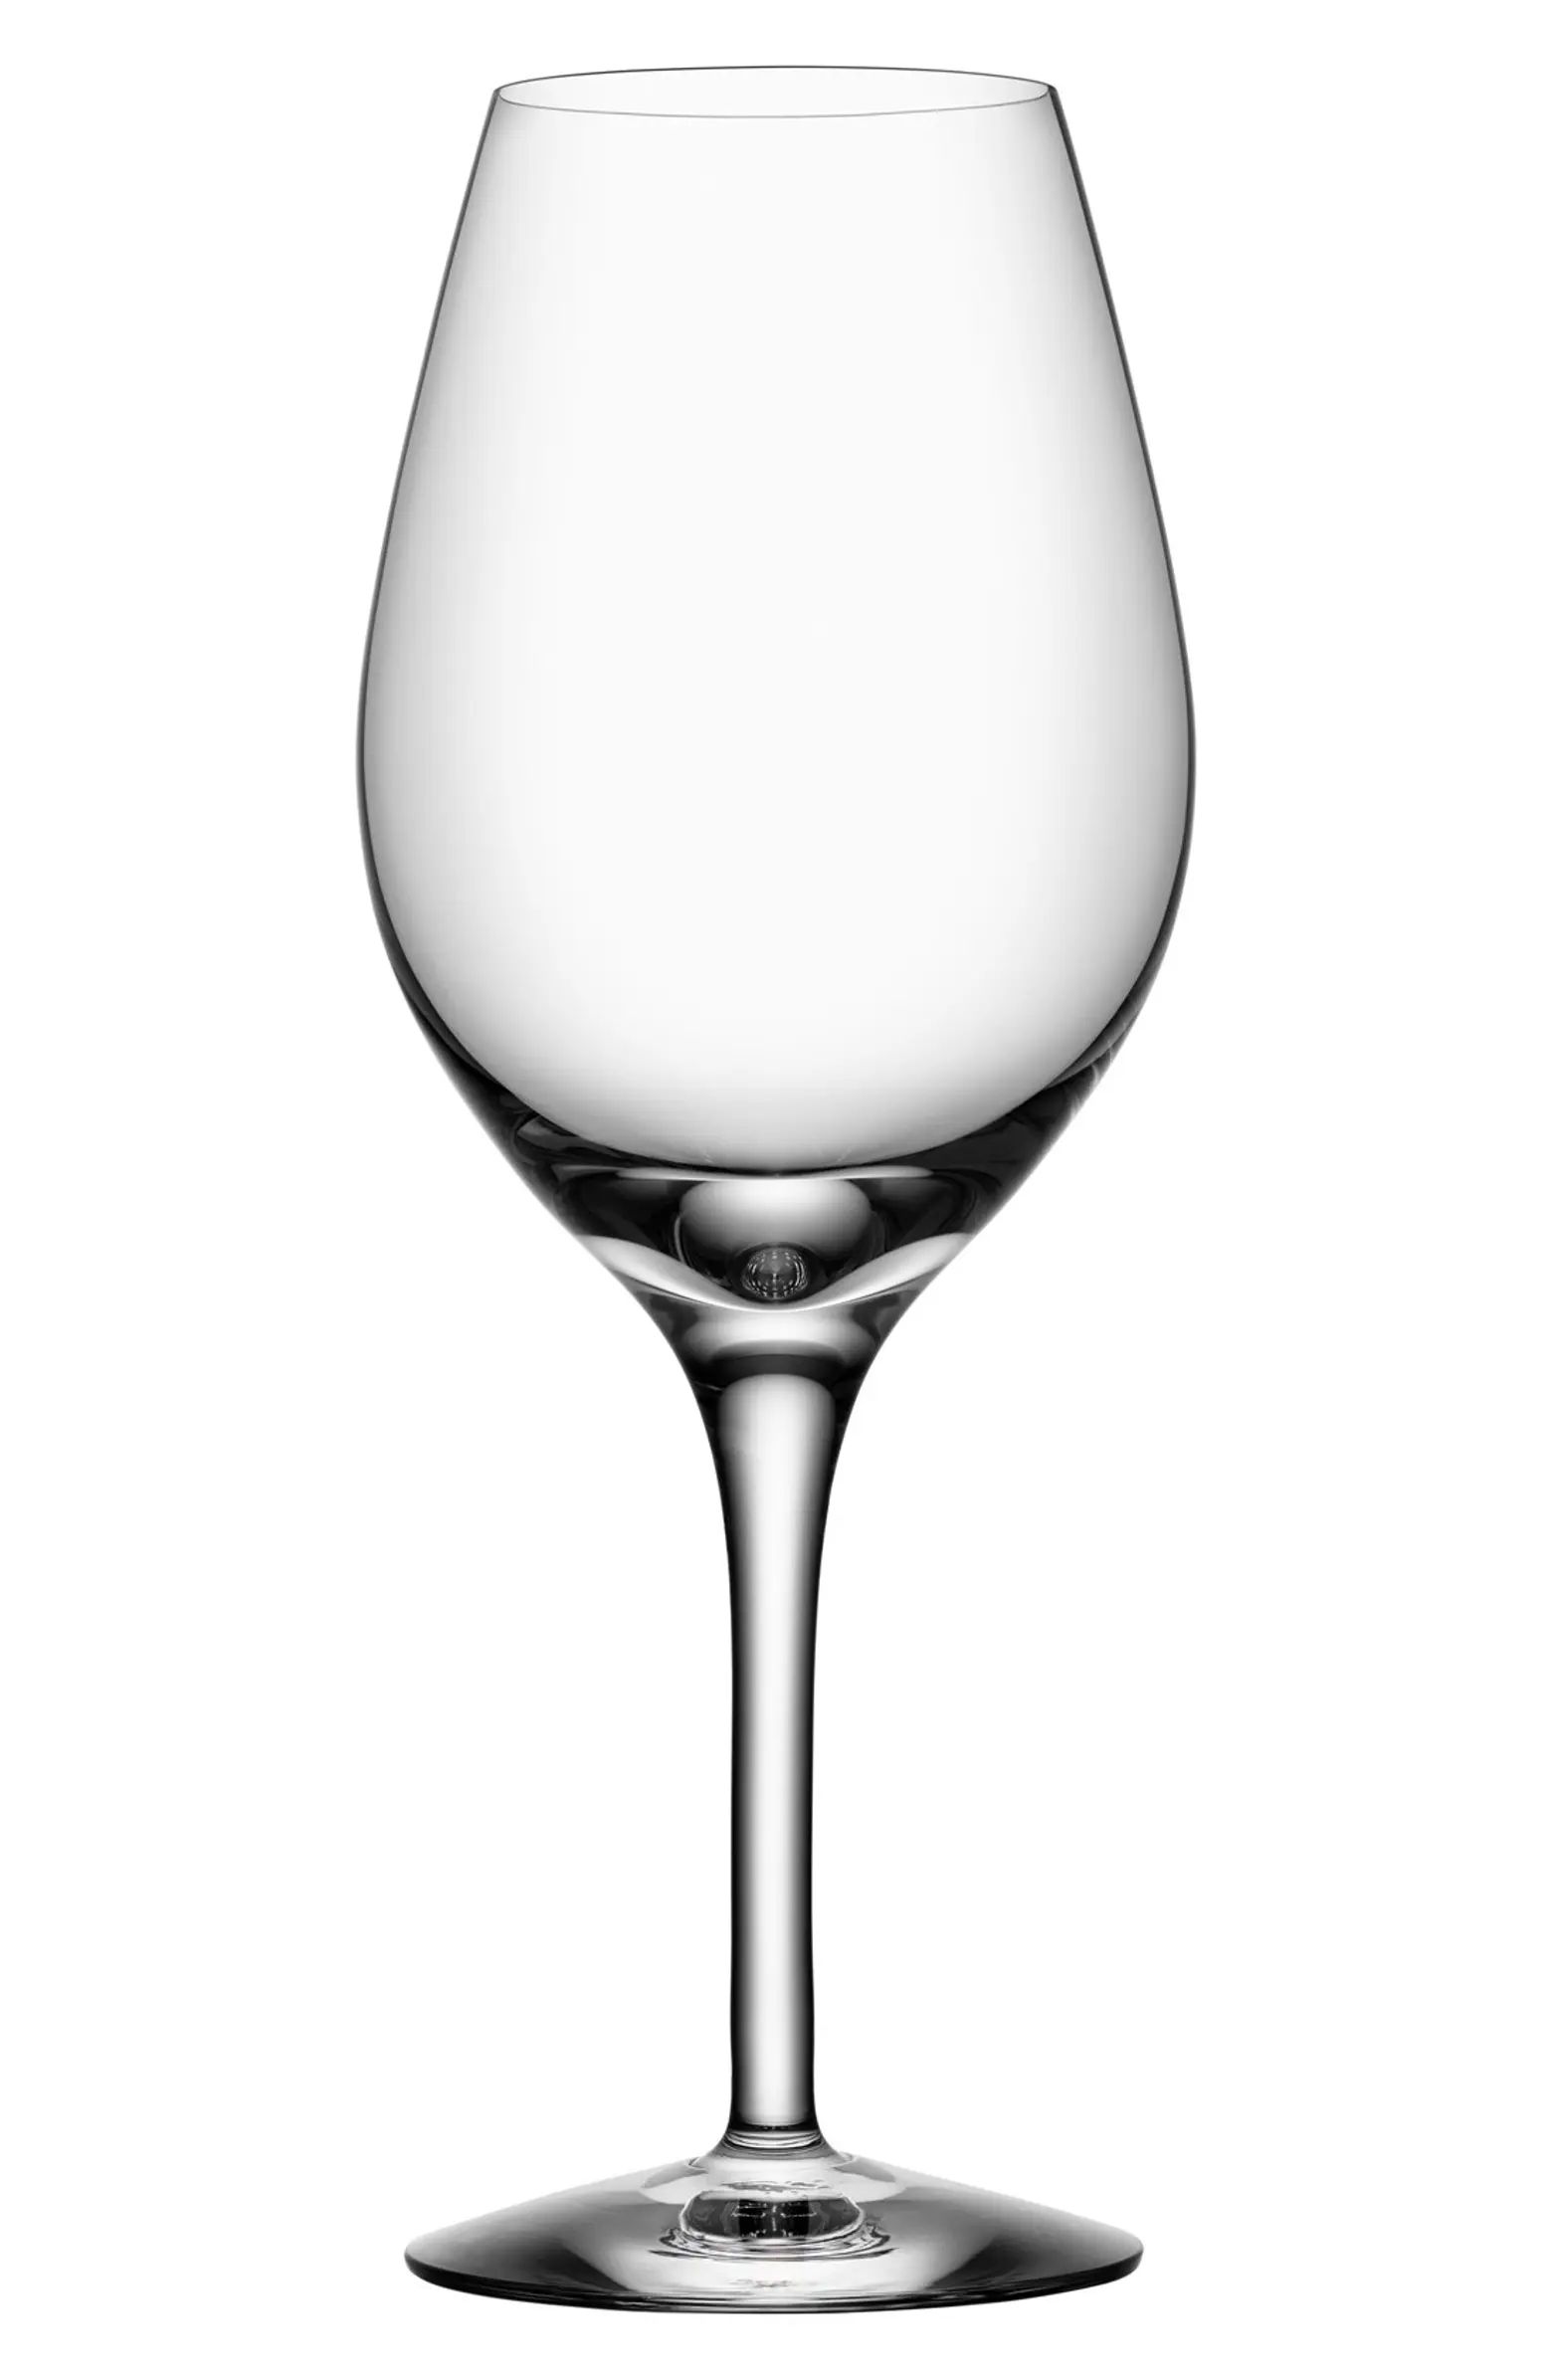 More Set of 4 Wine Glasses | Nordstrom